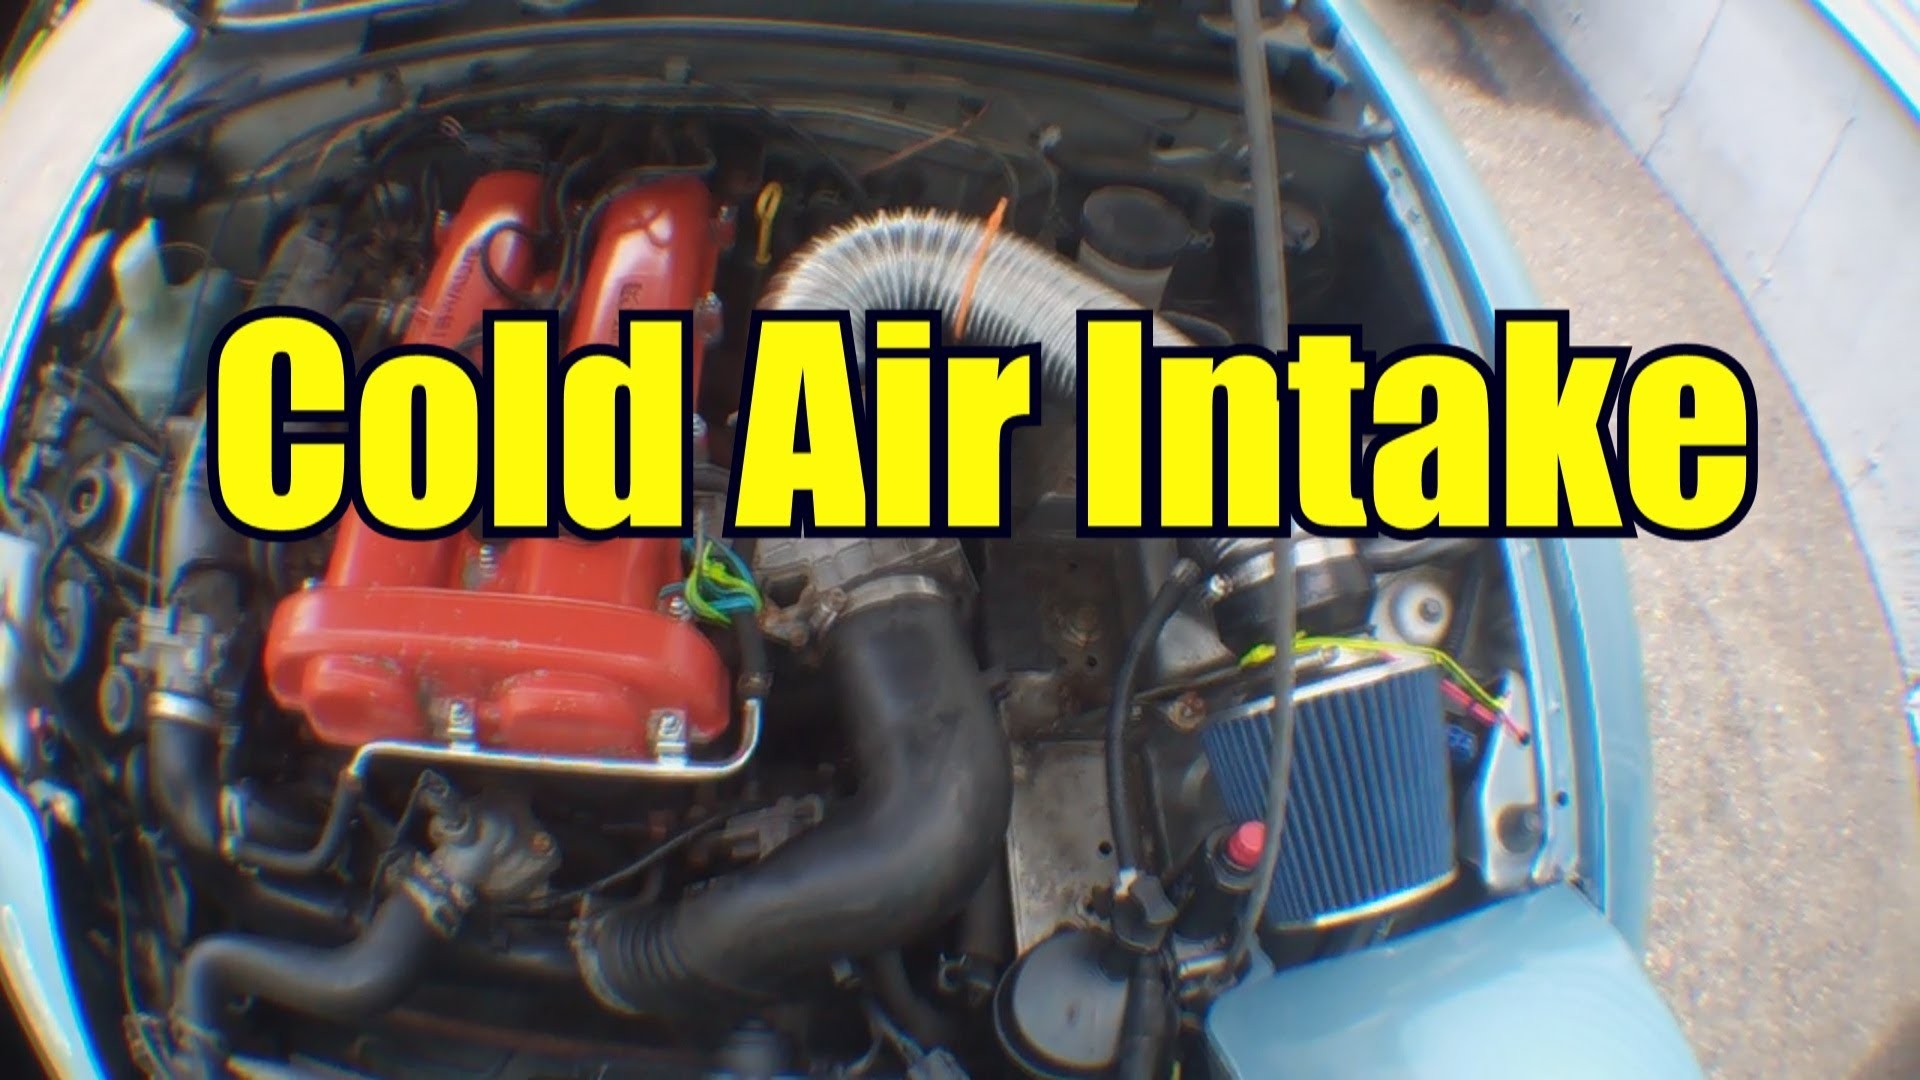 Mx5 Engine Bay Diagram Mazda Miata Cold Air Intake Haggard Garage Of Mx5 Engine Bay Diagram